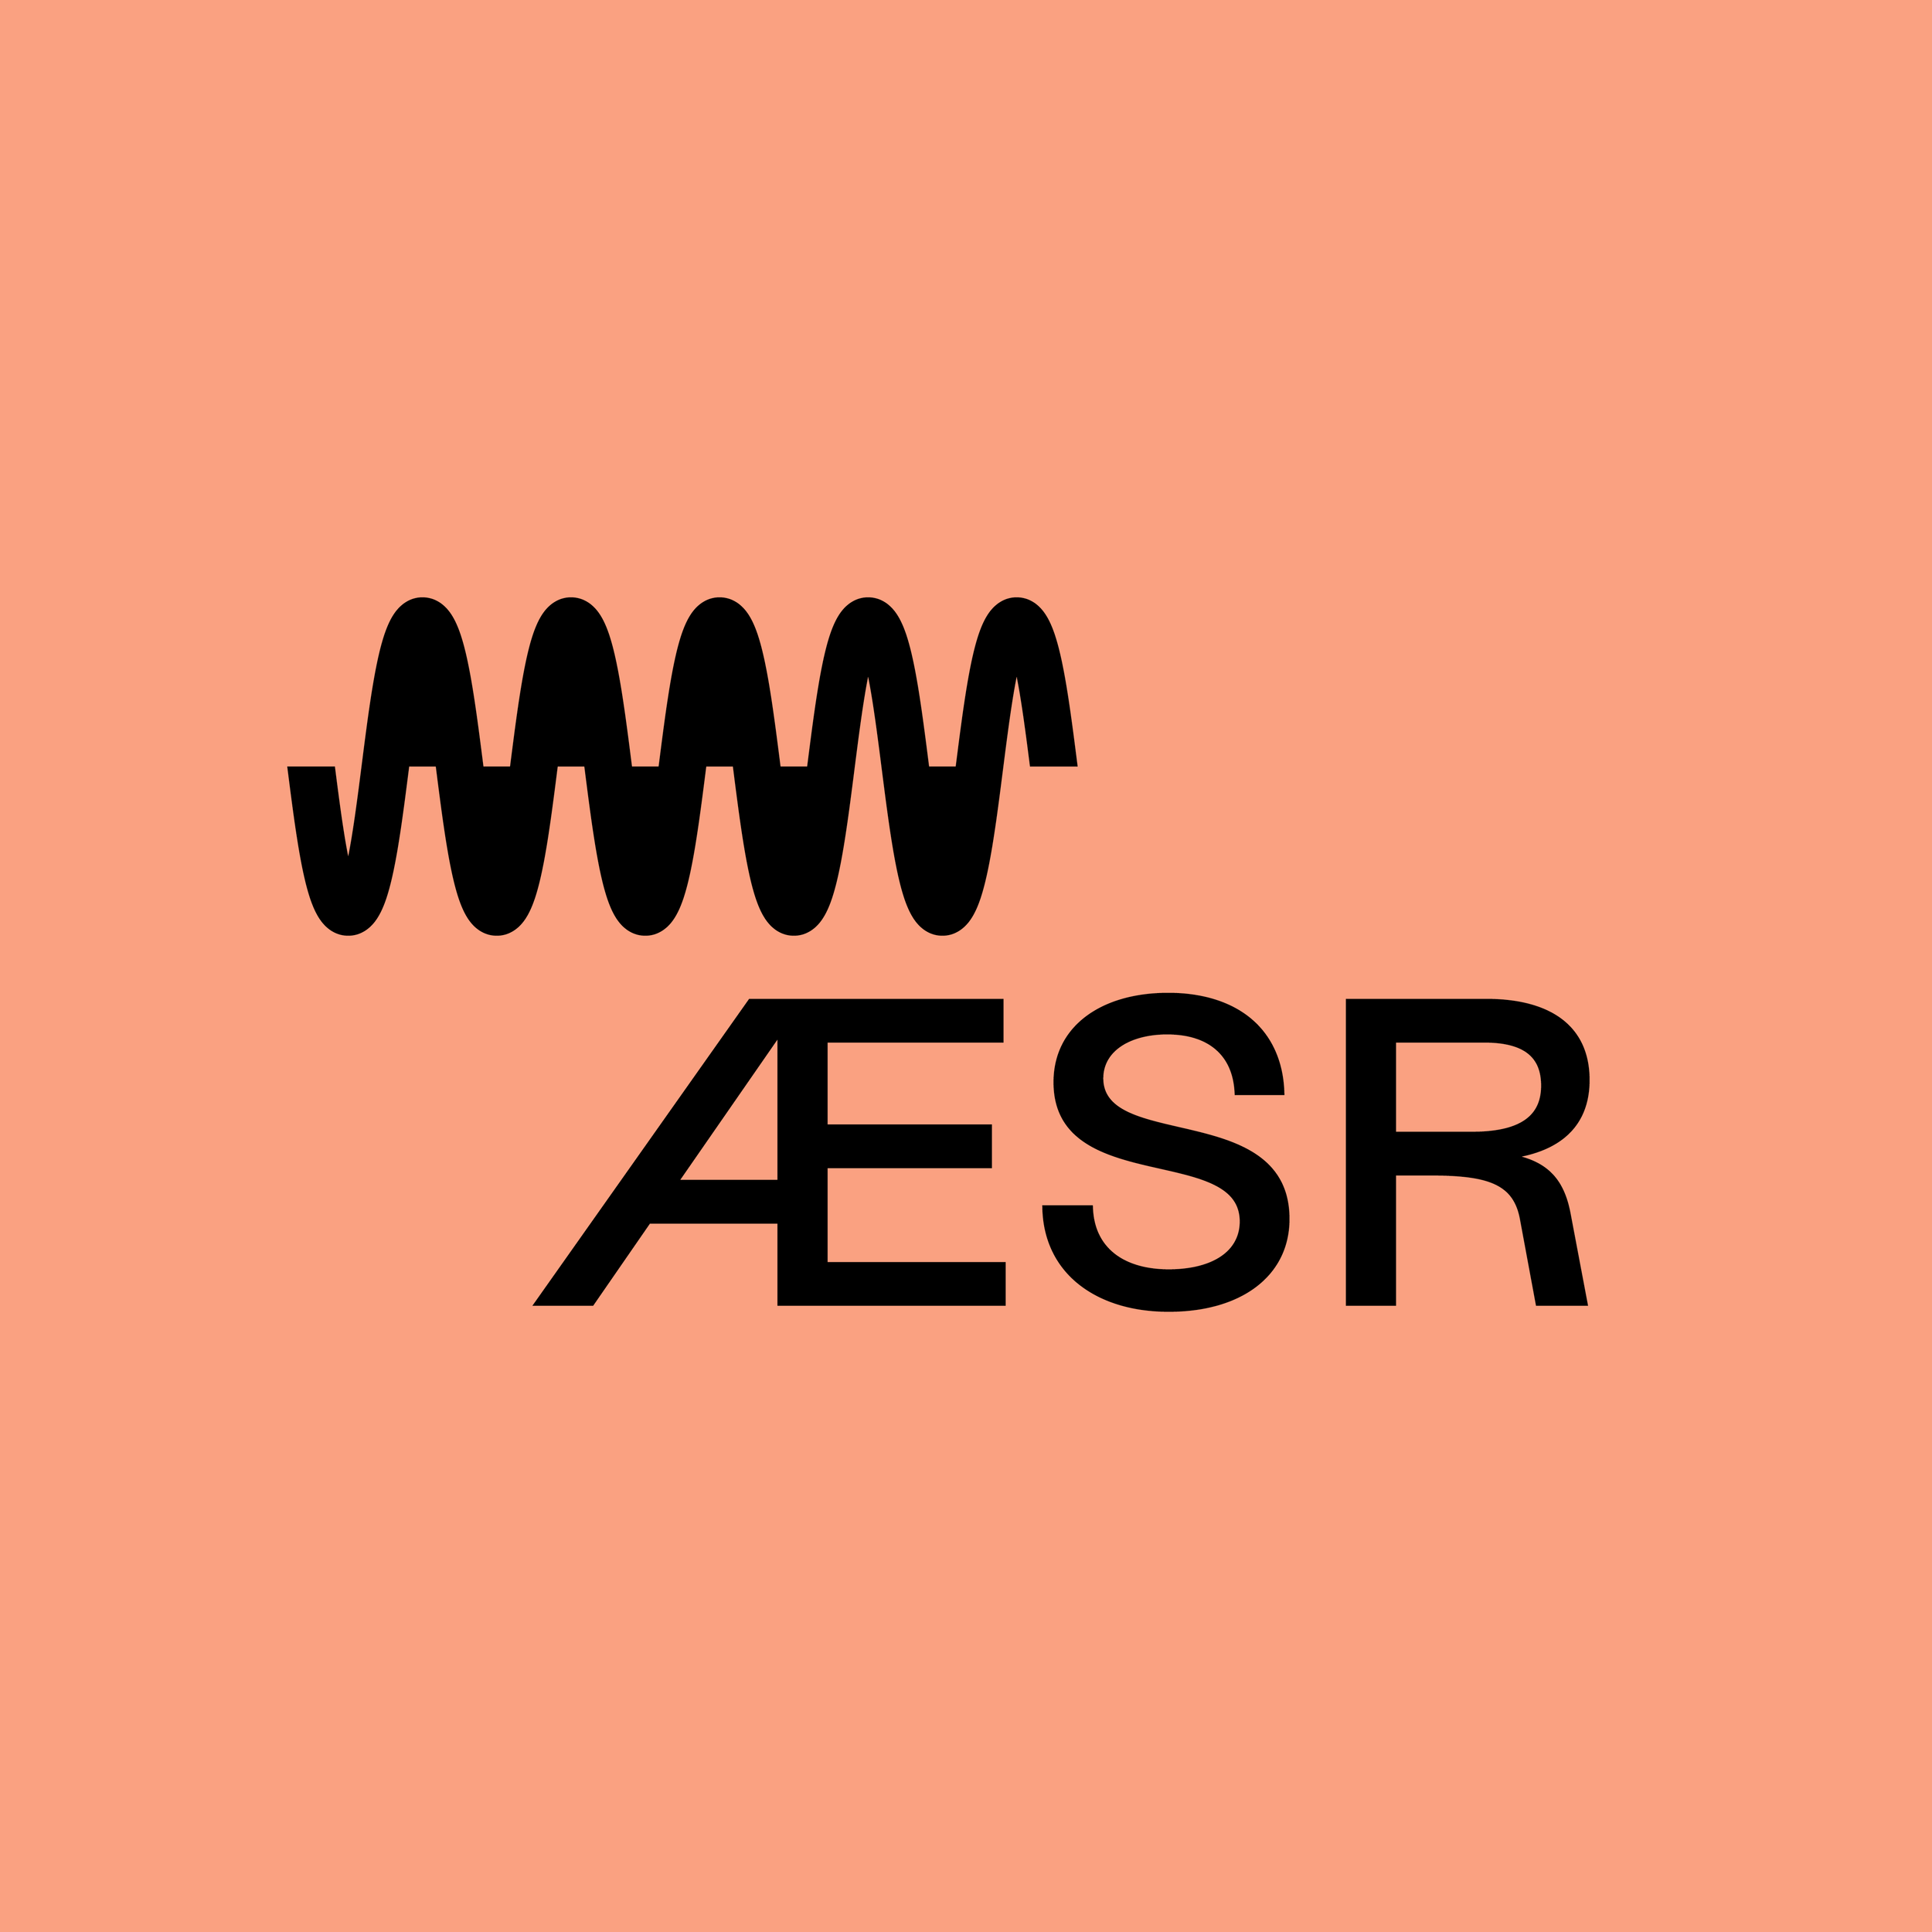 AESR-Instagram-2.png